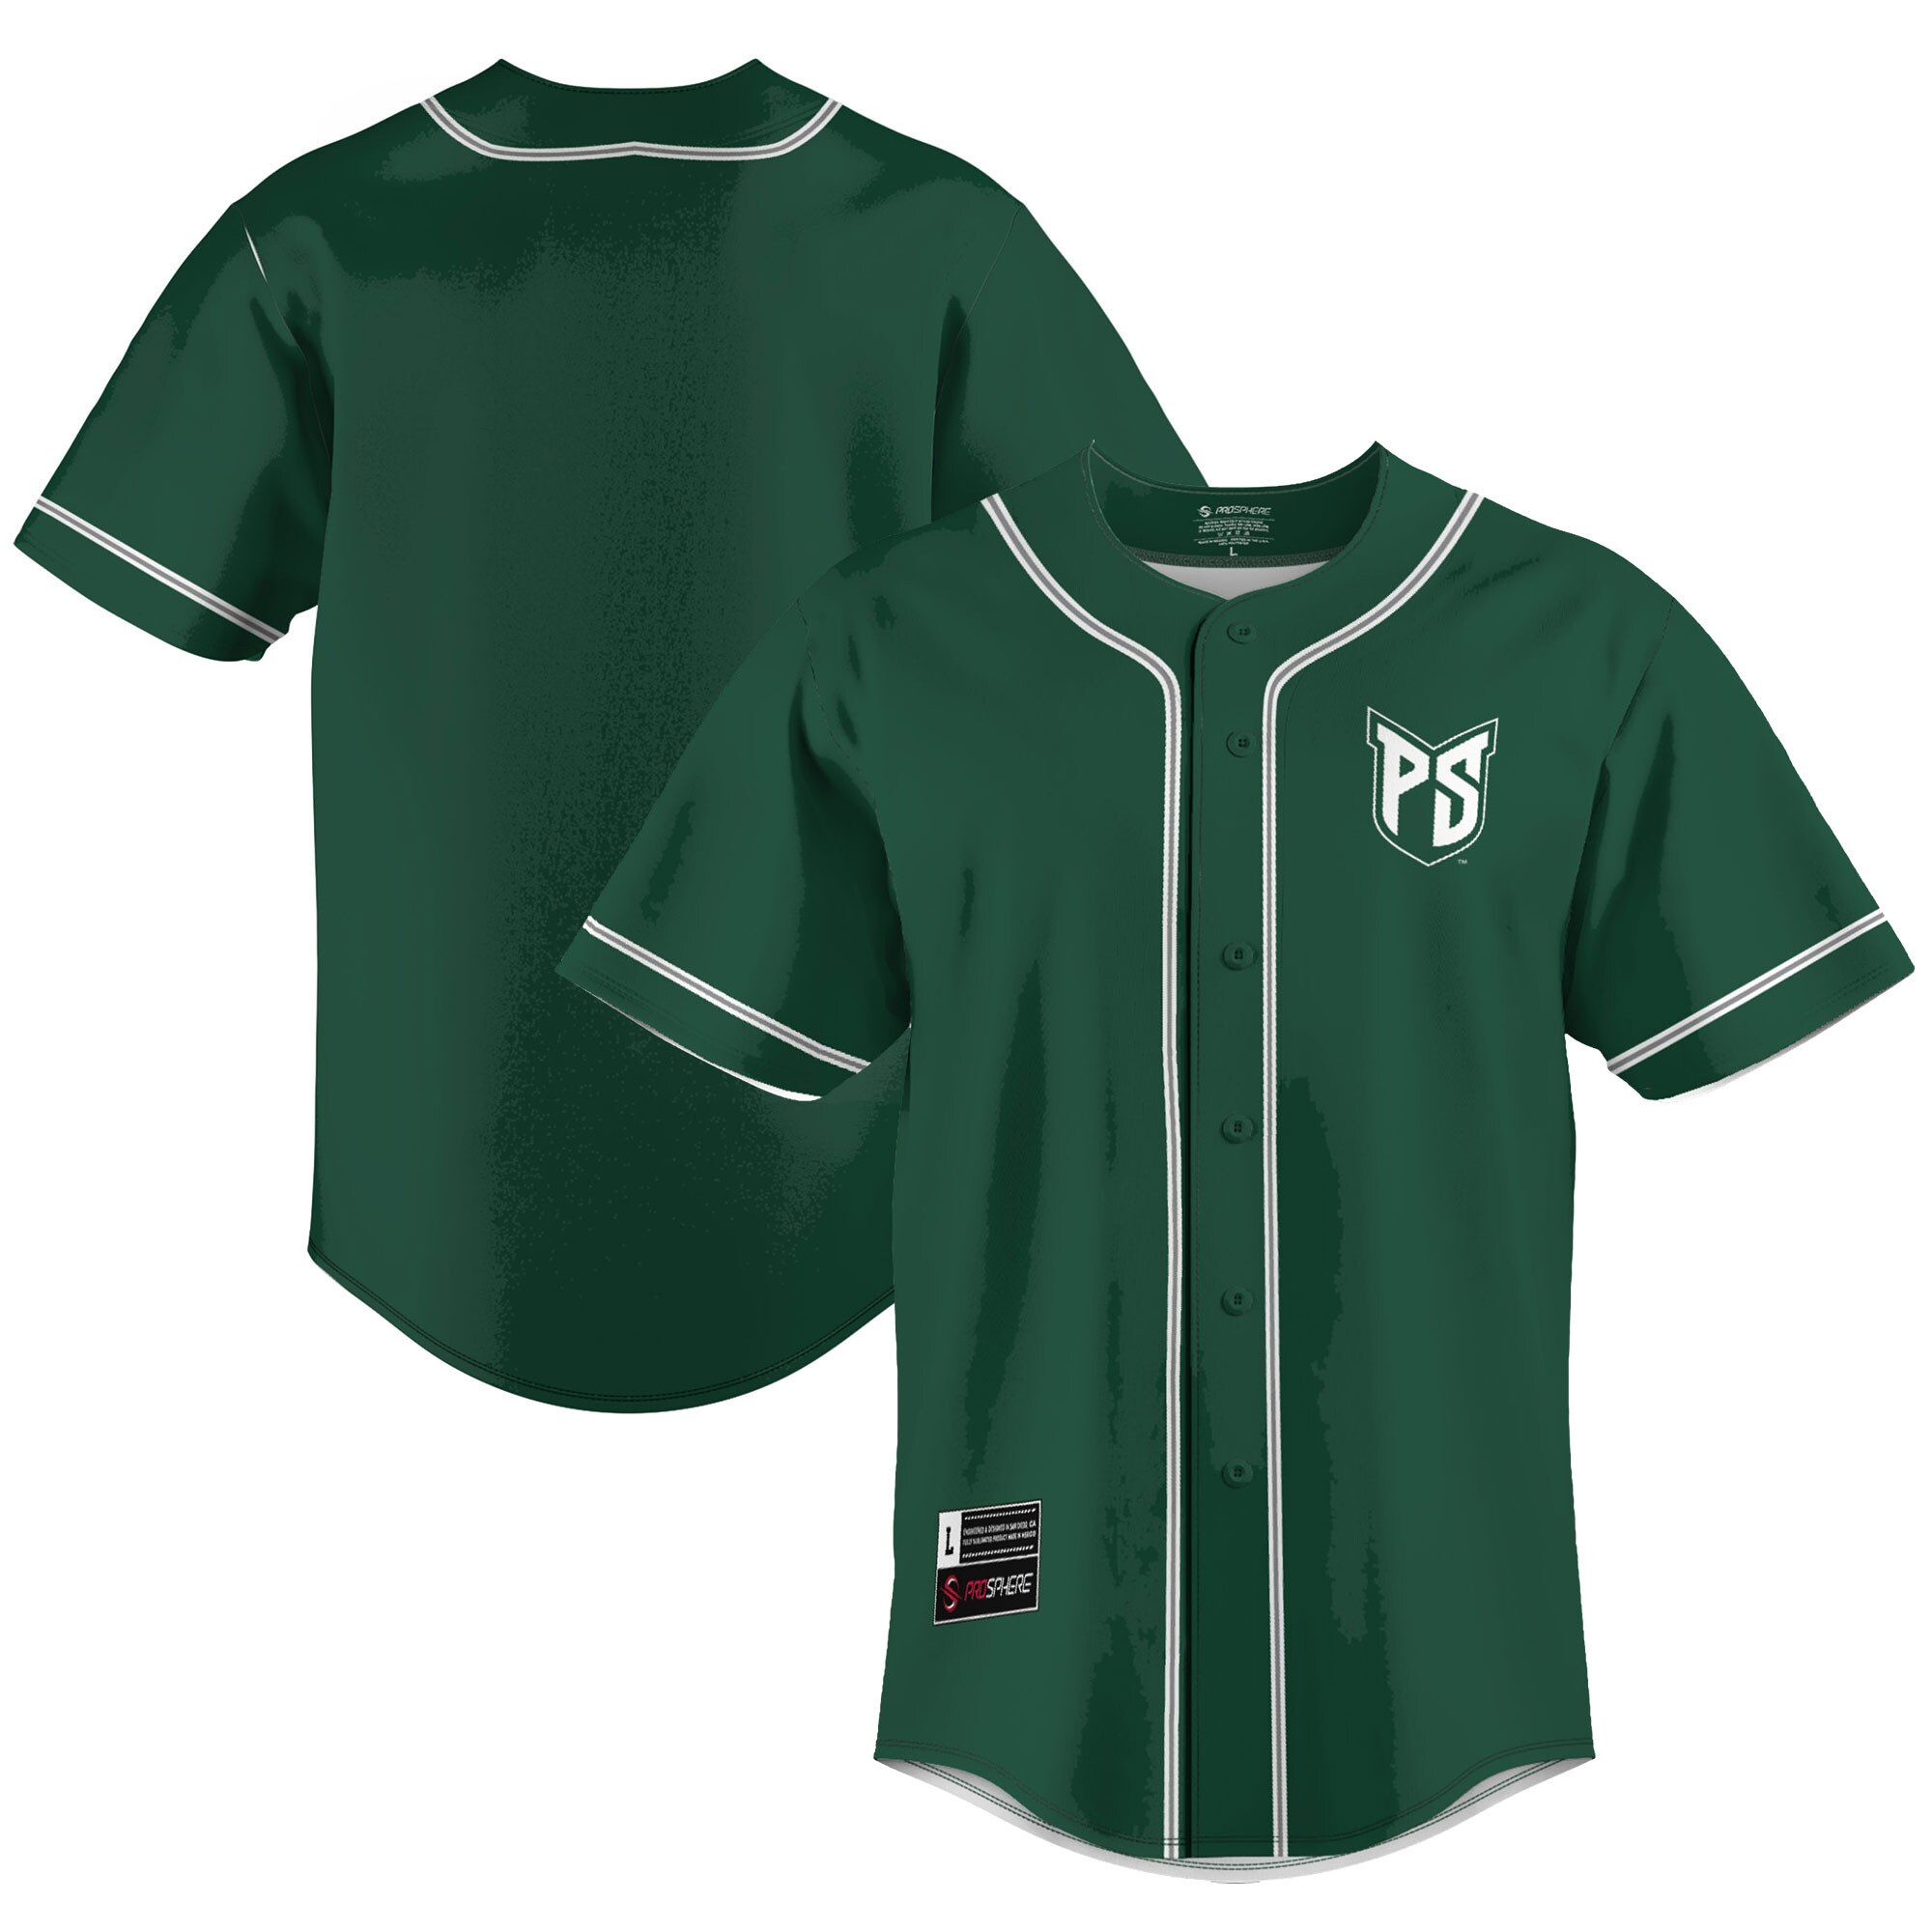 Portland State Vikings Baseball Jersey - Green For Youth Women Men